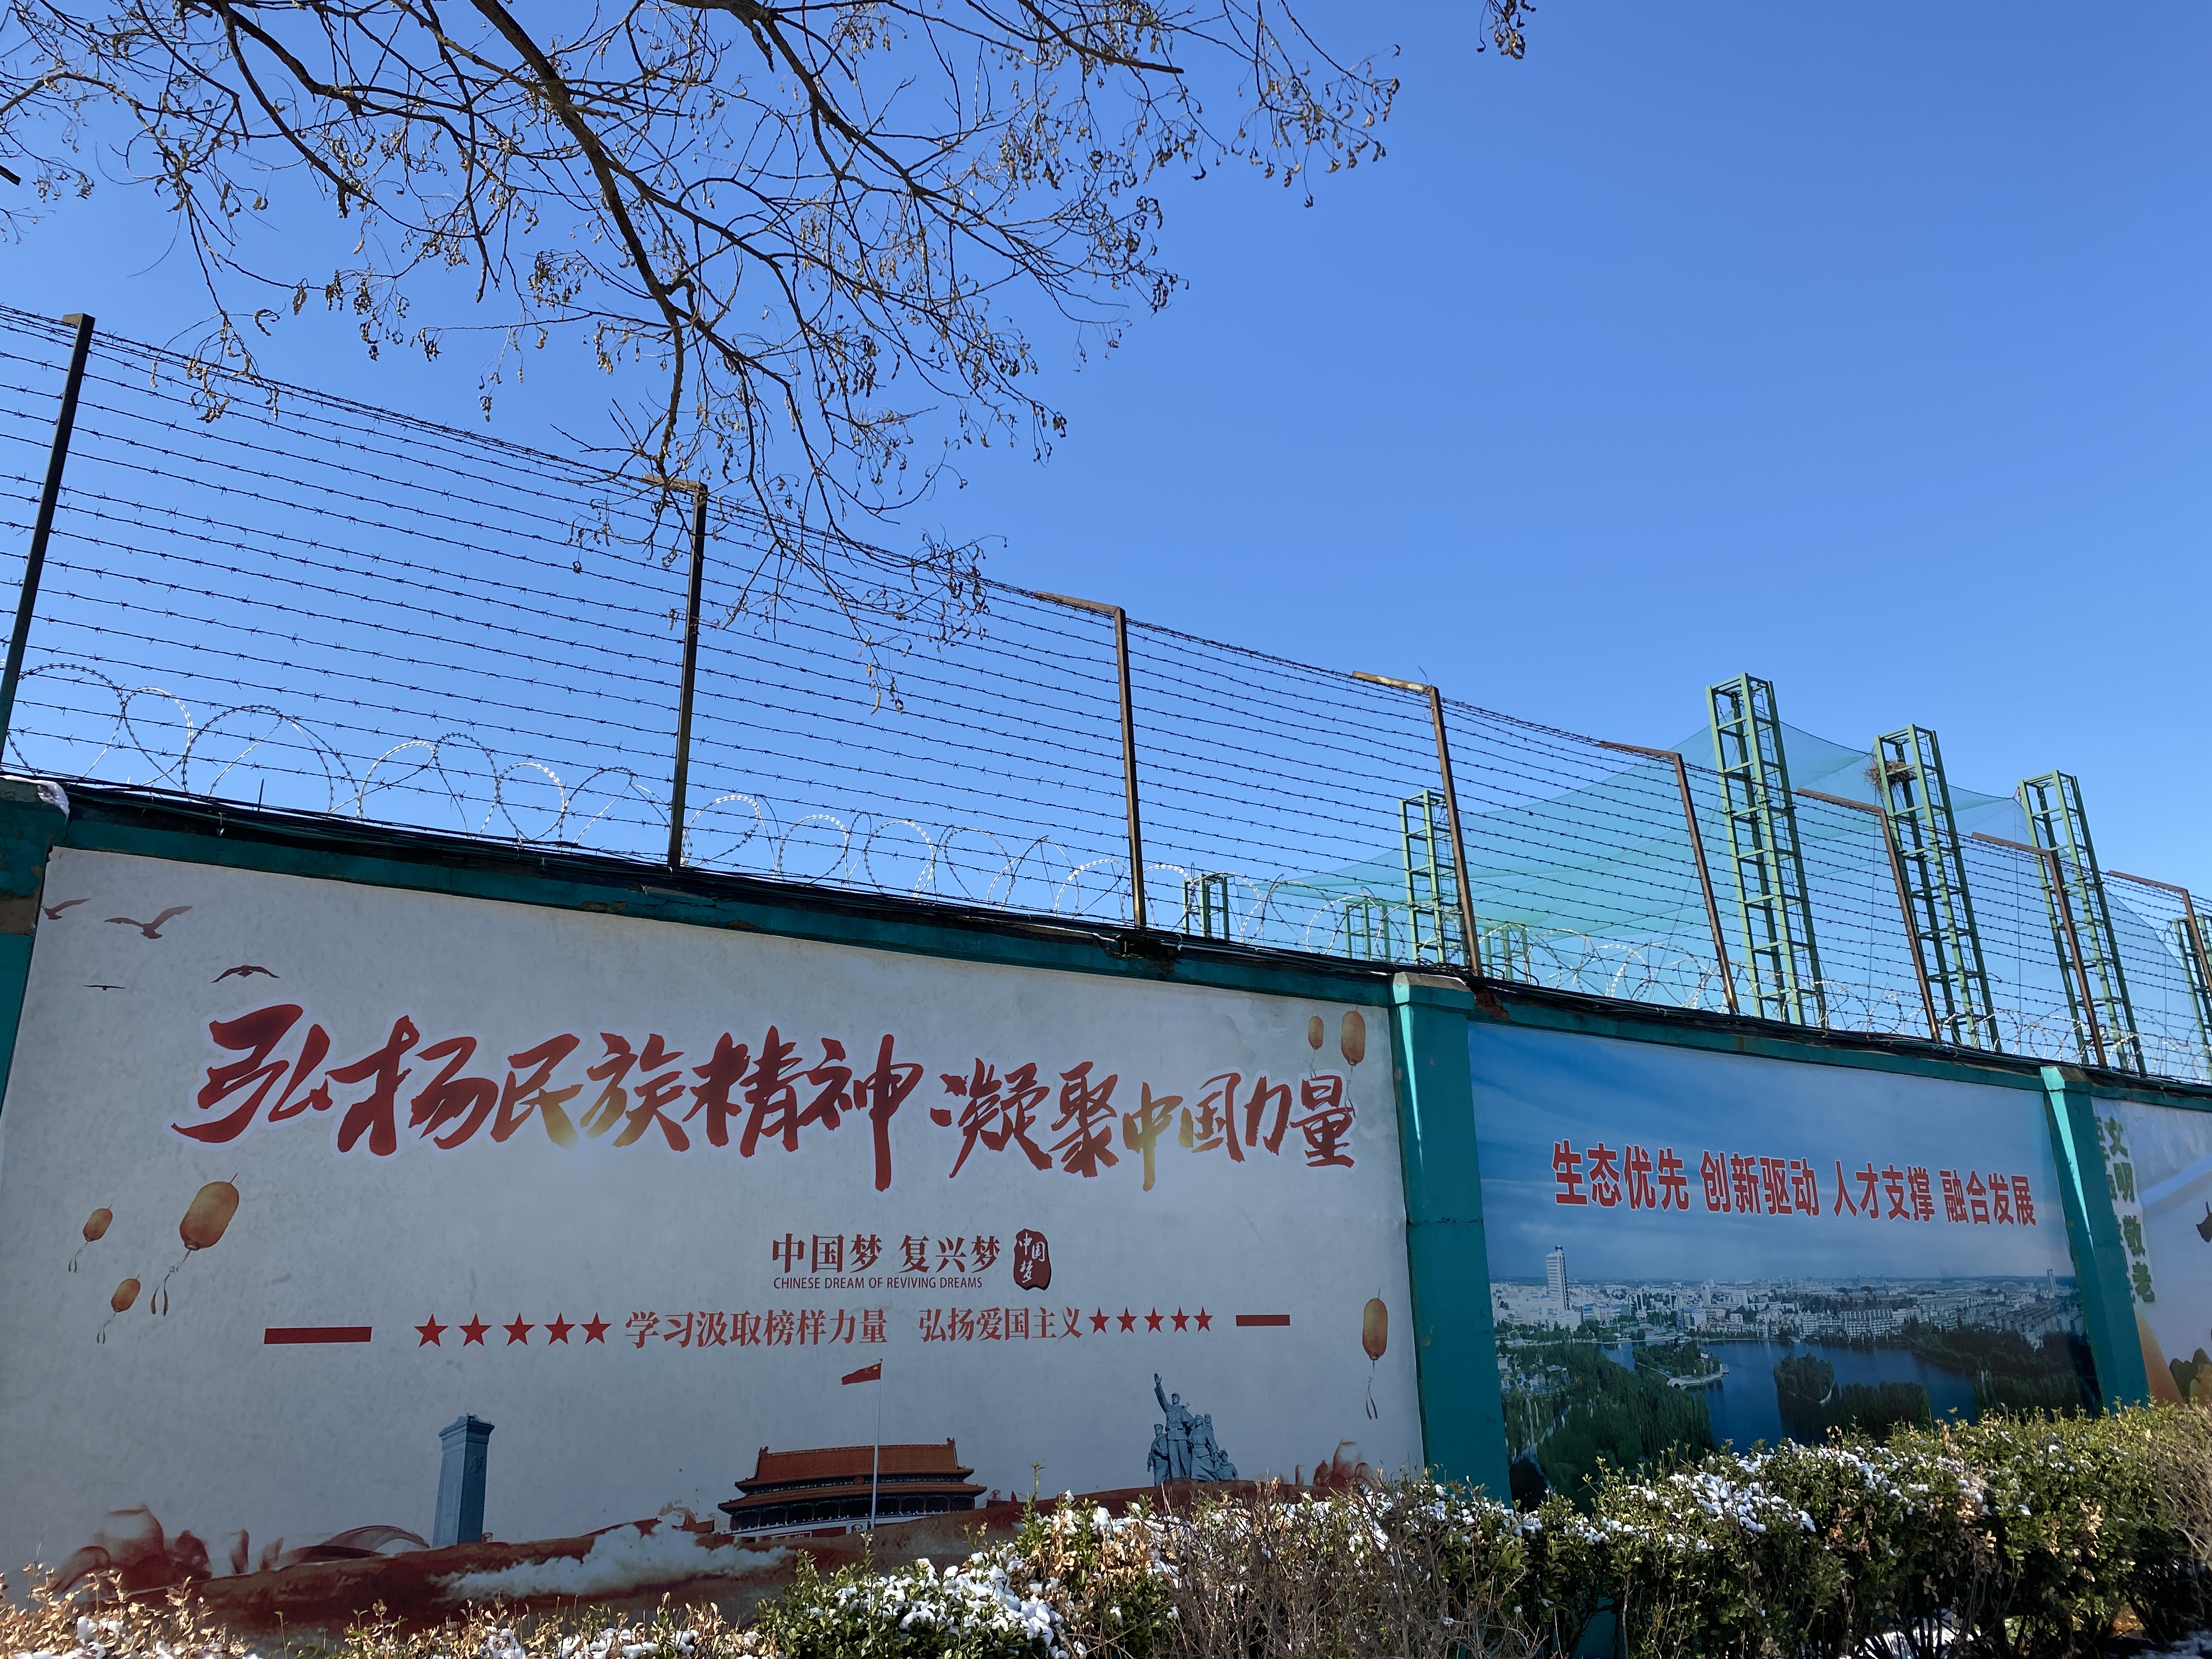  The fences along the side of the Qingdao Taekwang Shoes Co. factory